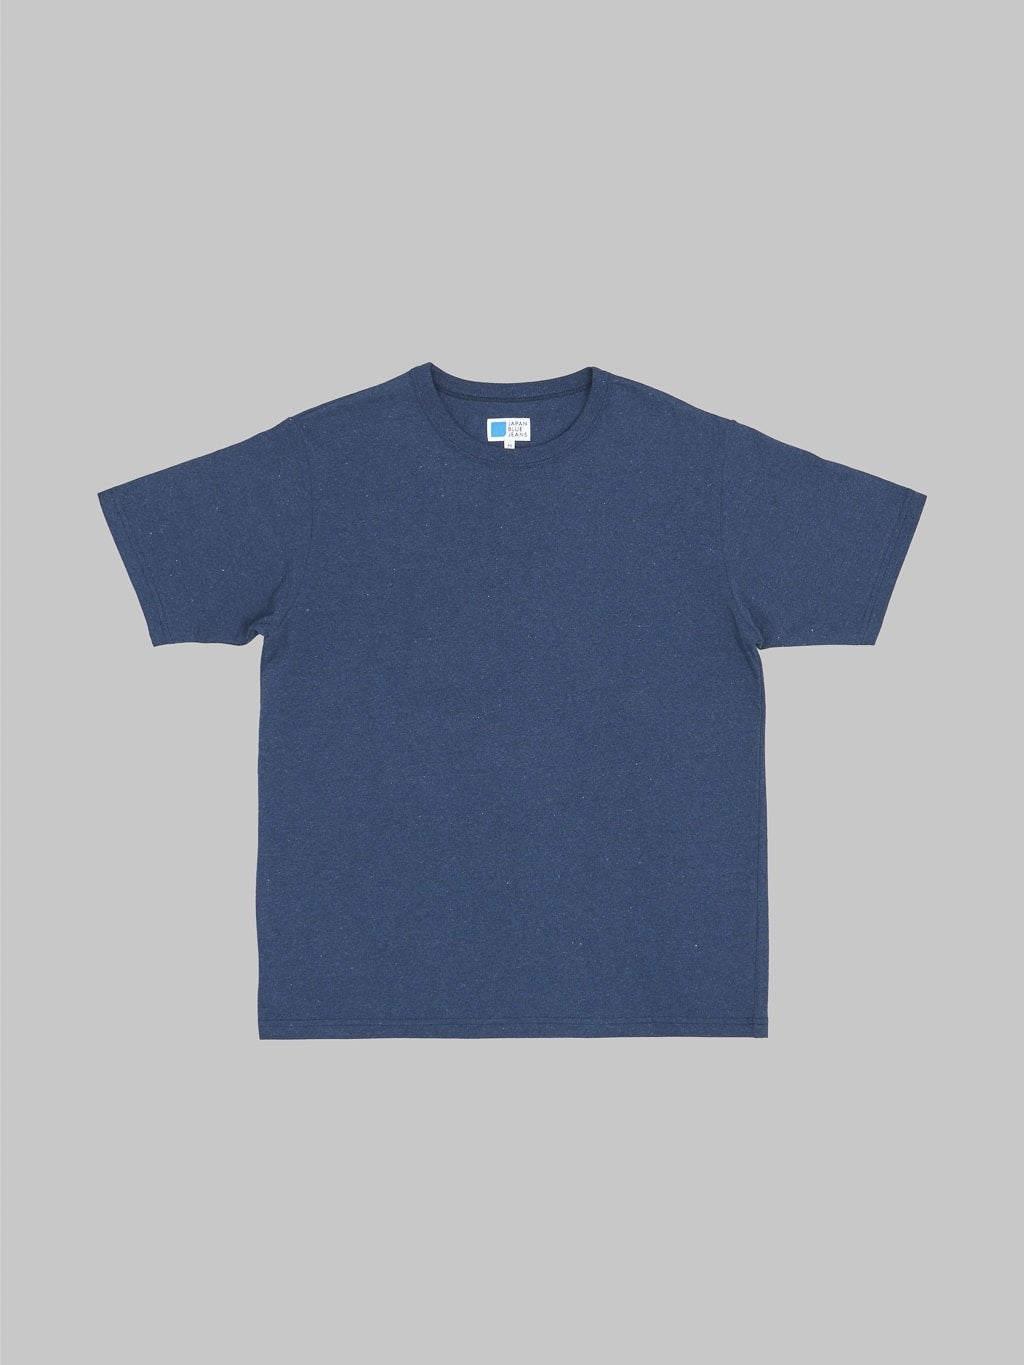 Japan Blue Recycled Denim Tshirt Dark Indigo front